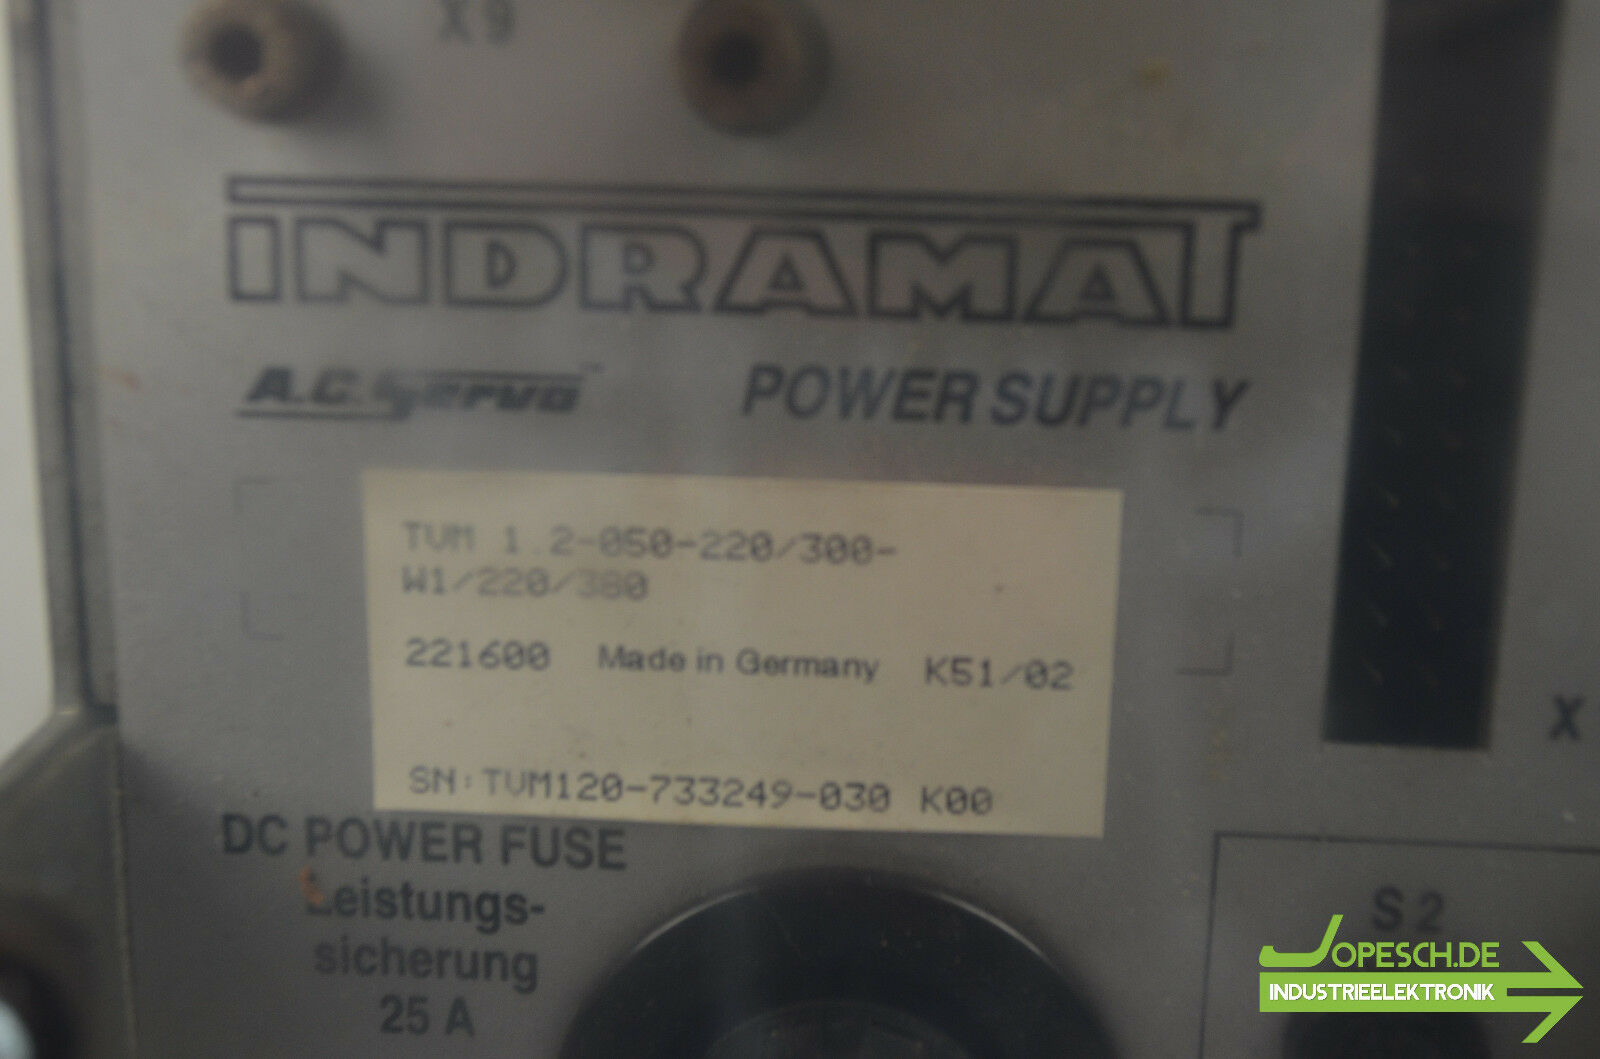 Indramat A.C.Servo Power Supply TVM 1.2-050-220/300-W1/220/380